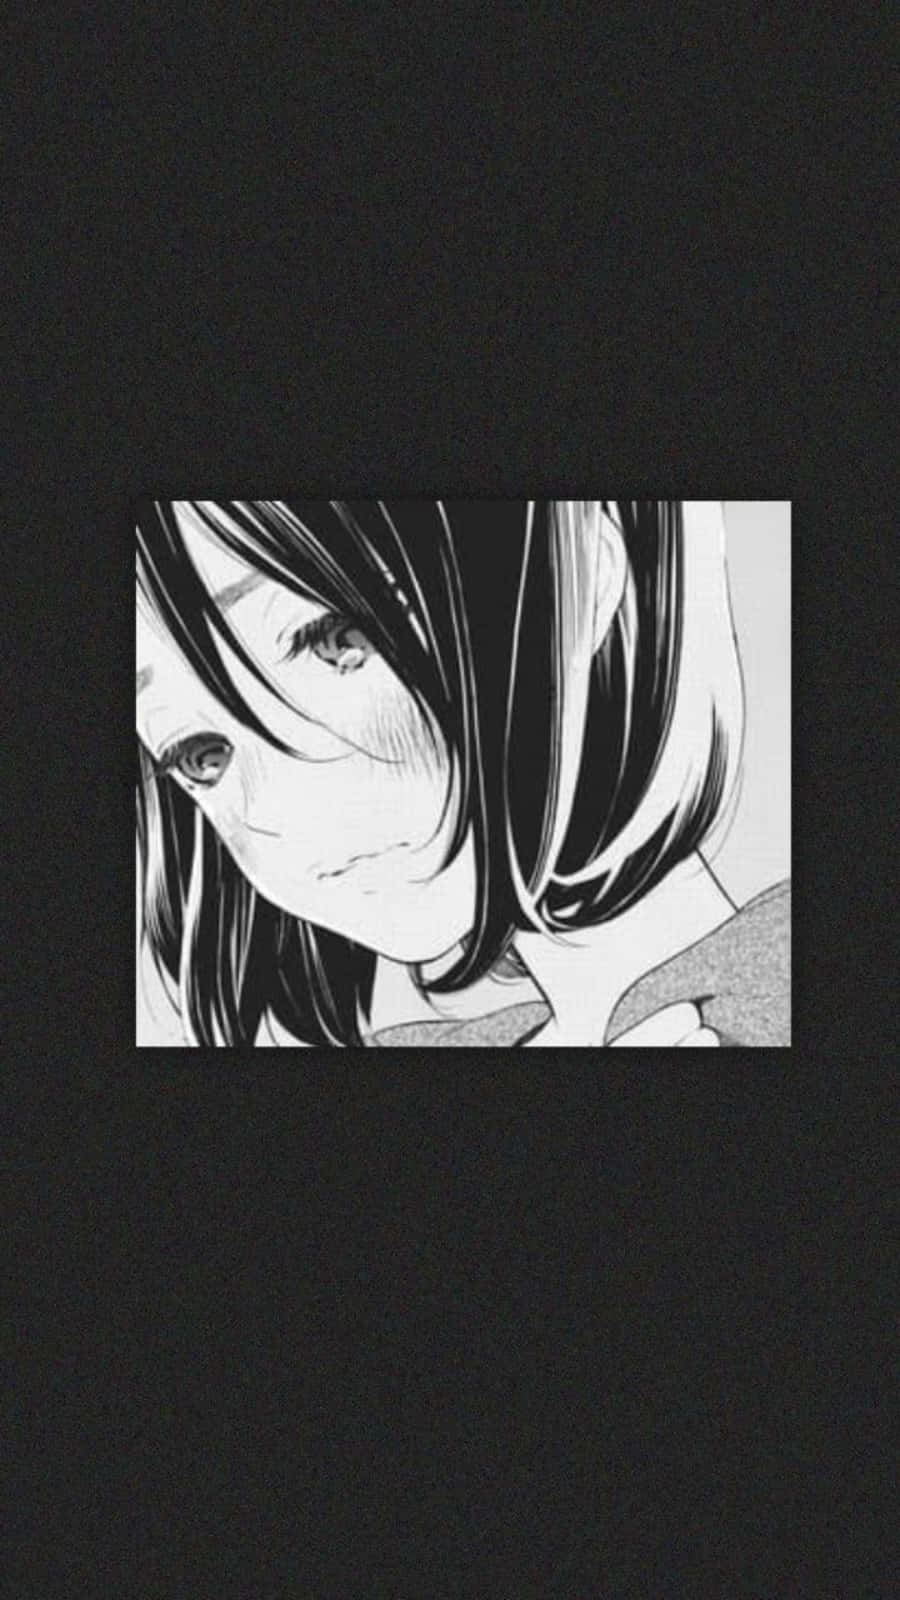 Manga Girl Sad Aesthetic Anime Wallpaper